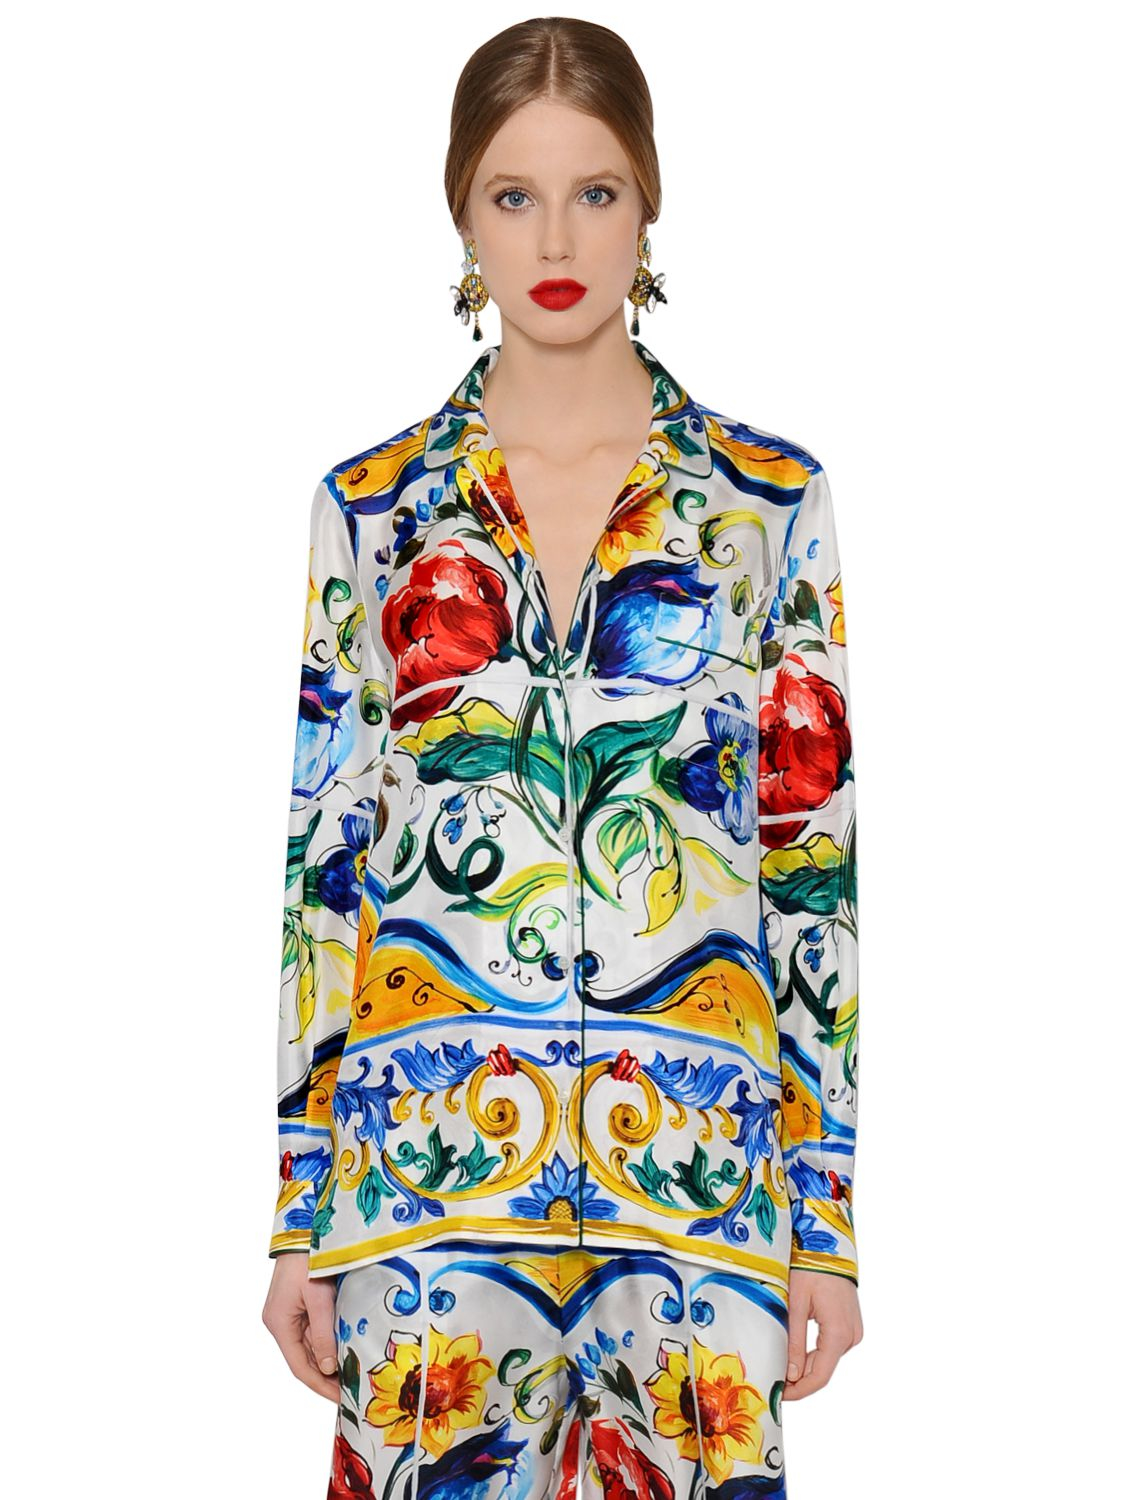 Dolce & gabbana Maiolica Printed Silk Twill Shirt in Multicolor | Lyst